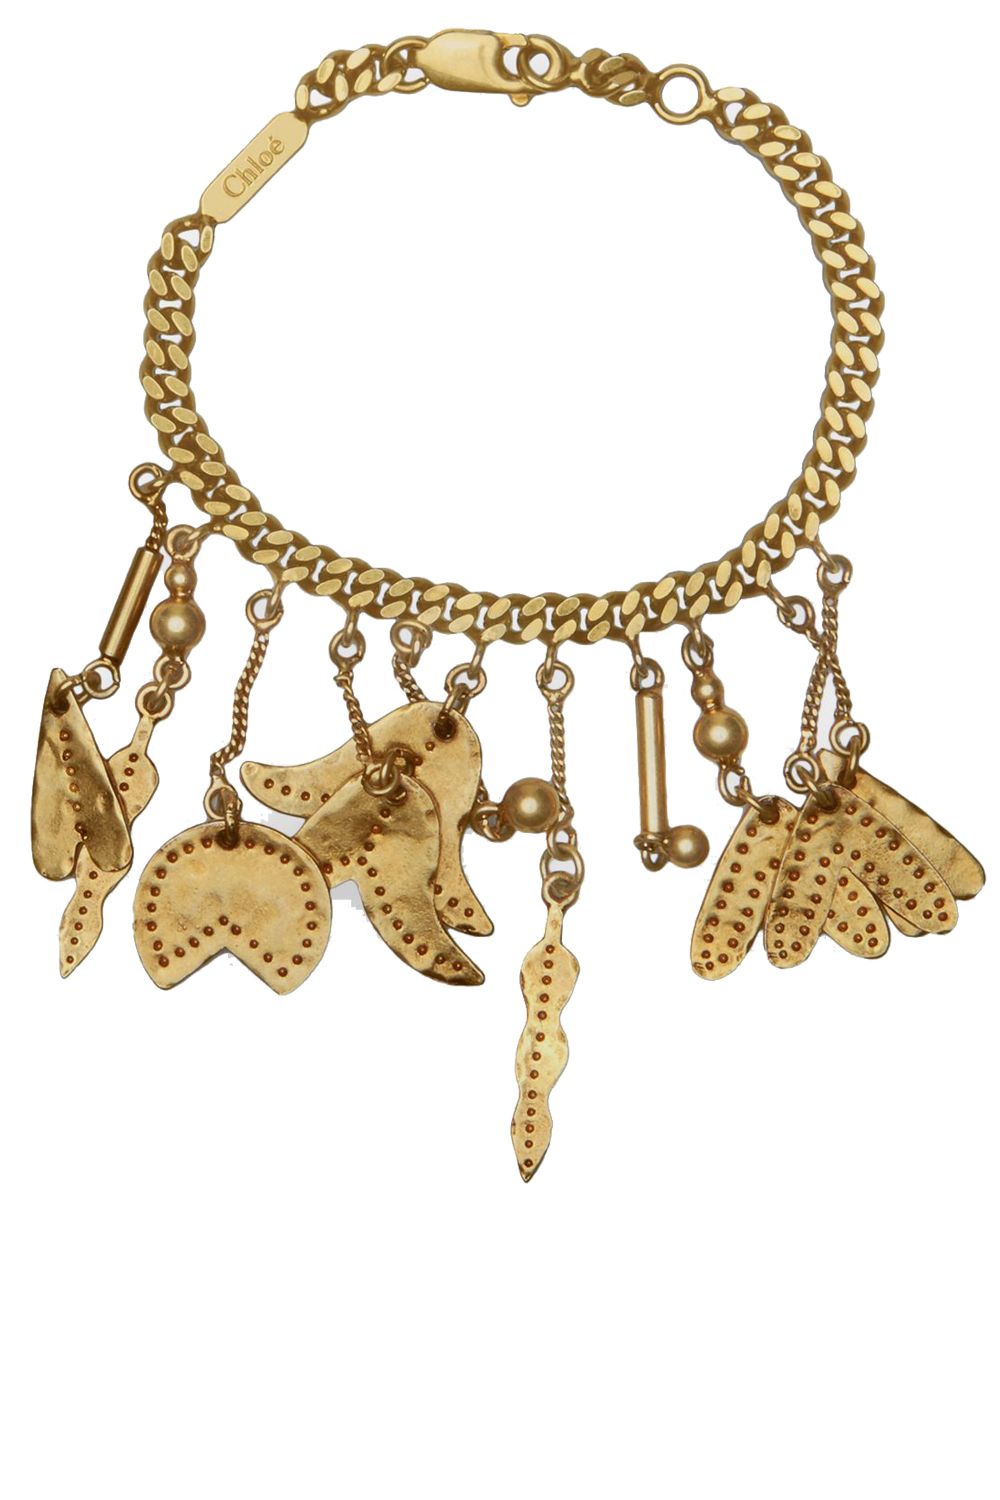 Crystal Charm Bracelets Gold Bracelet For Womens Ladies Bead Safety Chain UK  | eBay